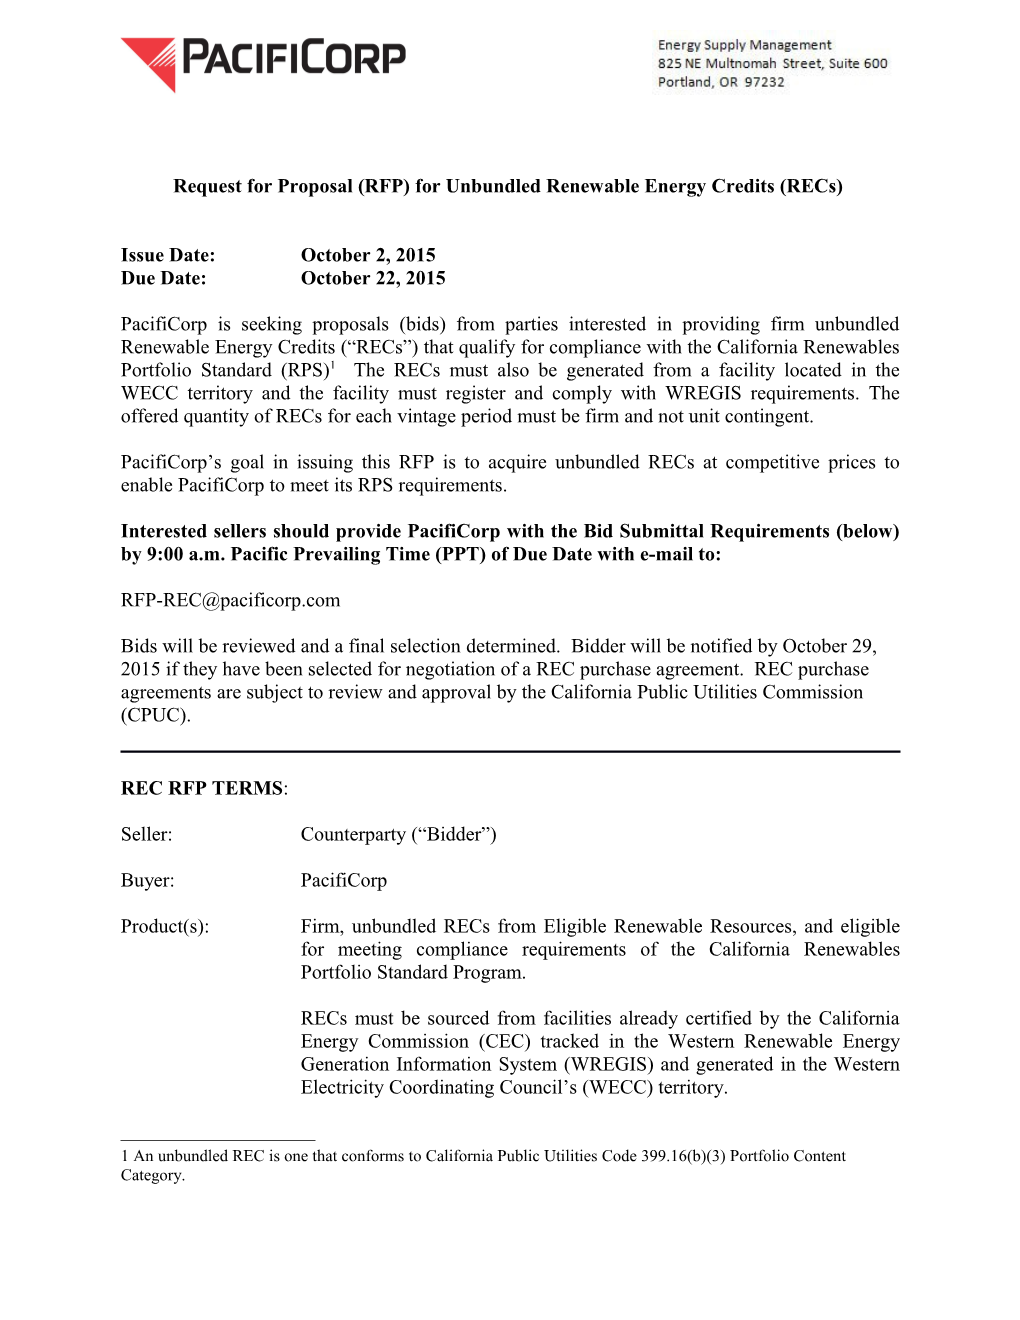 Request for Proposal (RFP) for Unbundled Renewable Energy Credits (Recs)